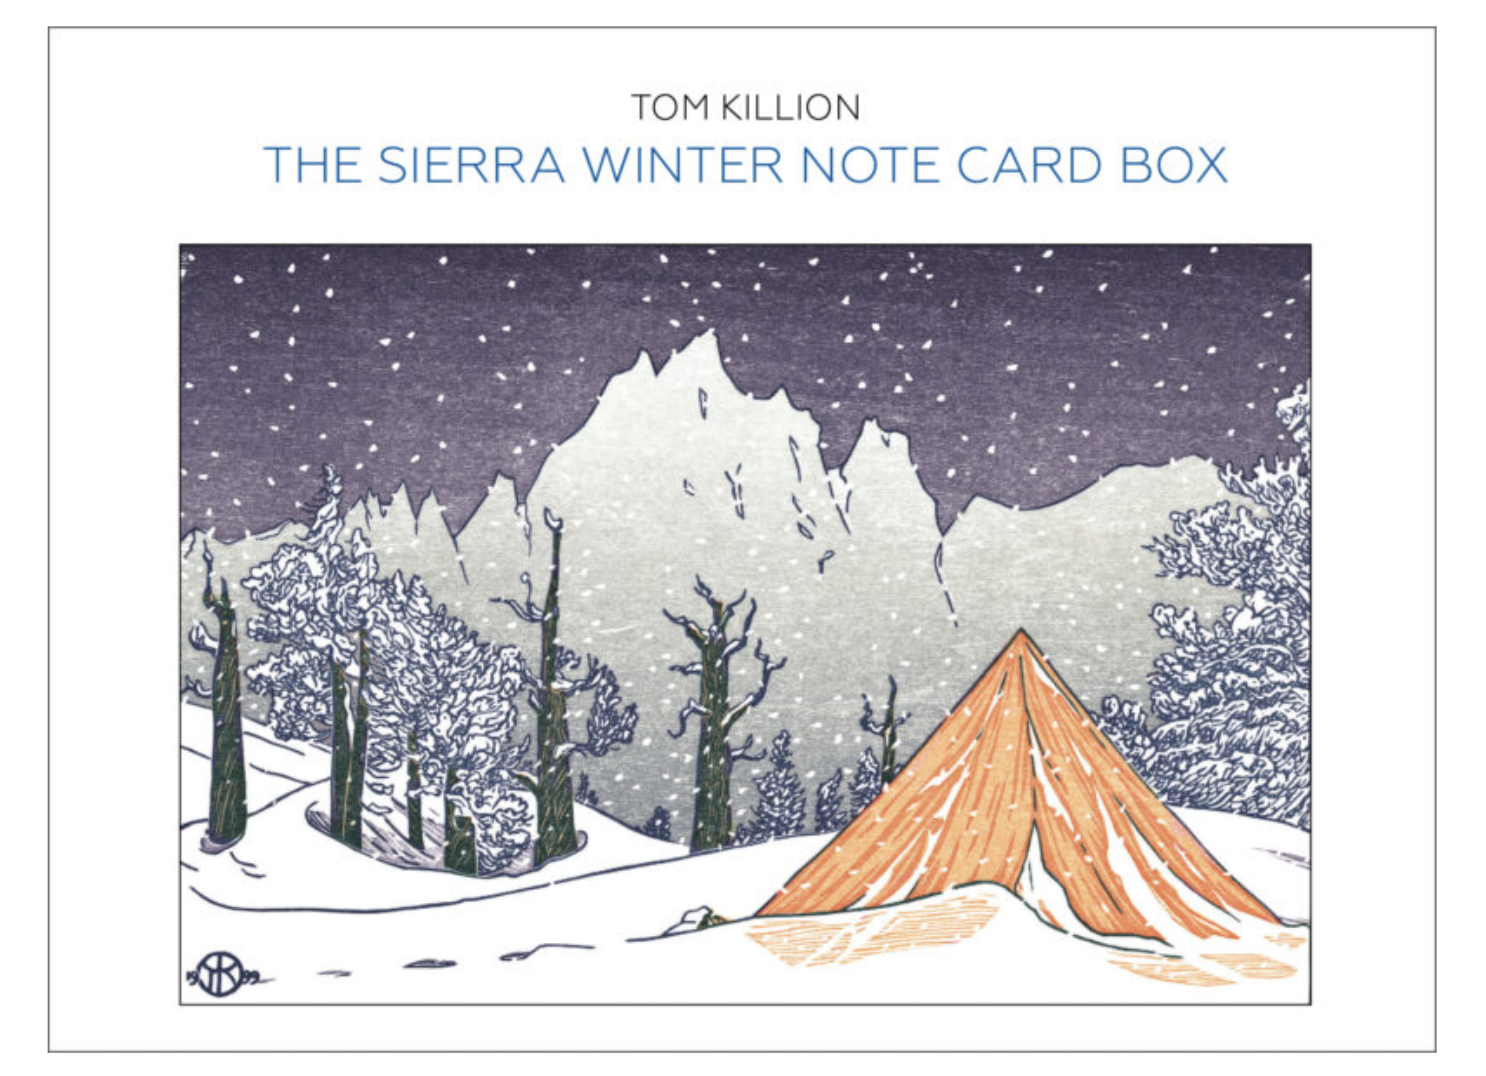 The Sierra Winter Notecard Box